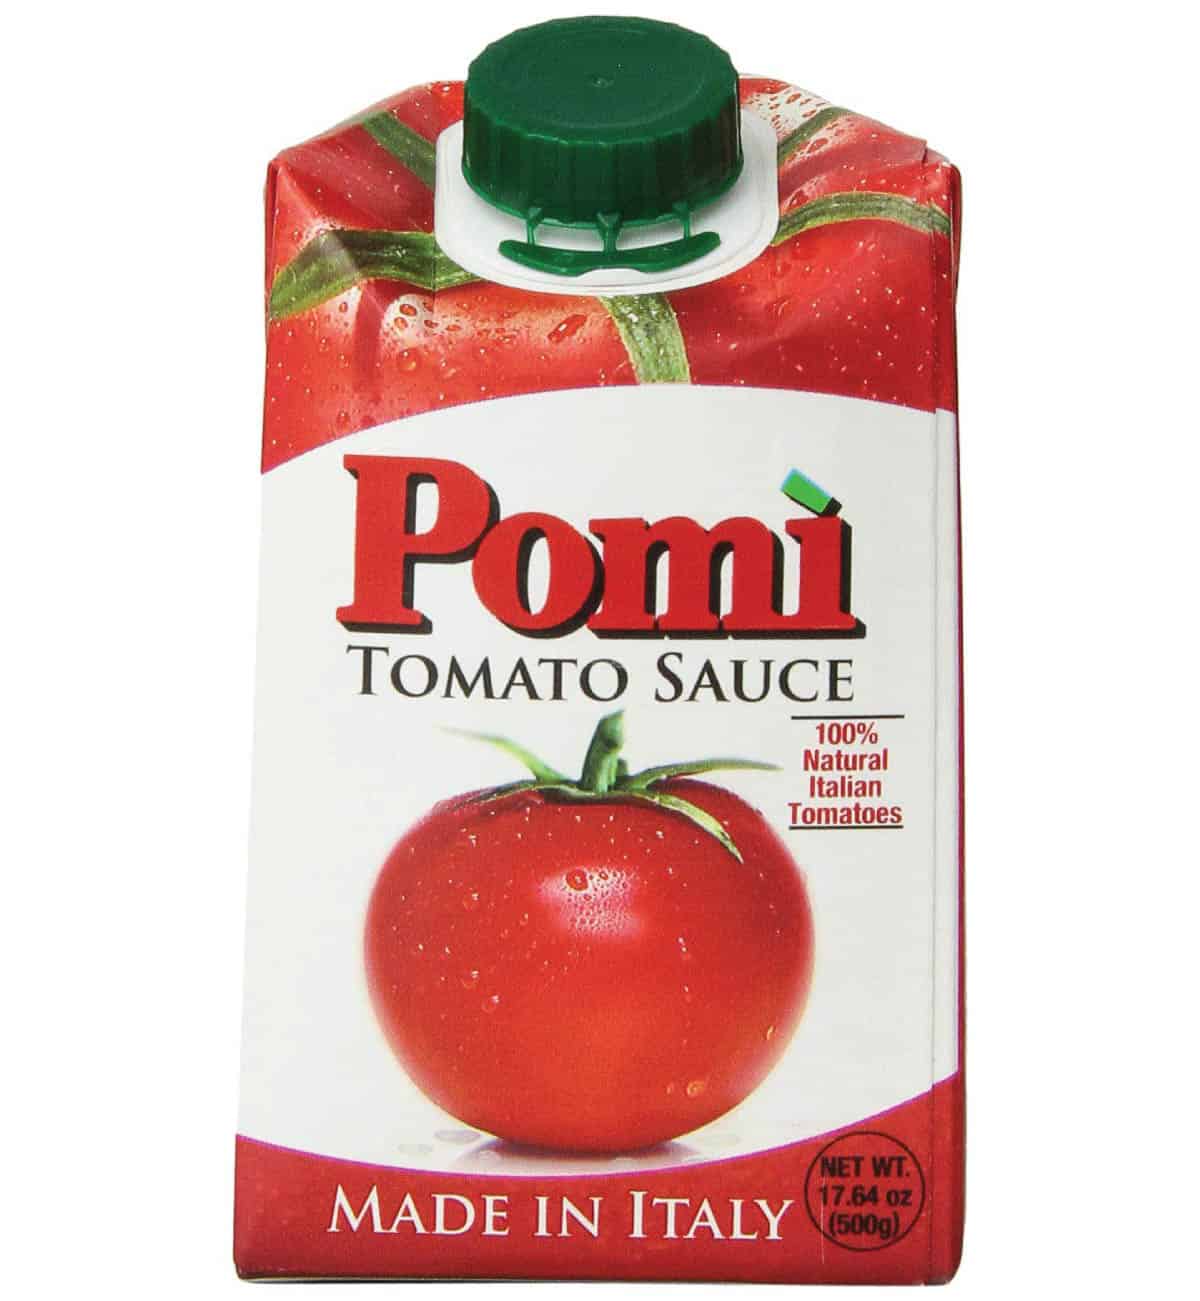 Pomi tomato sauce in a carton.